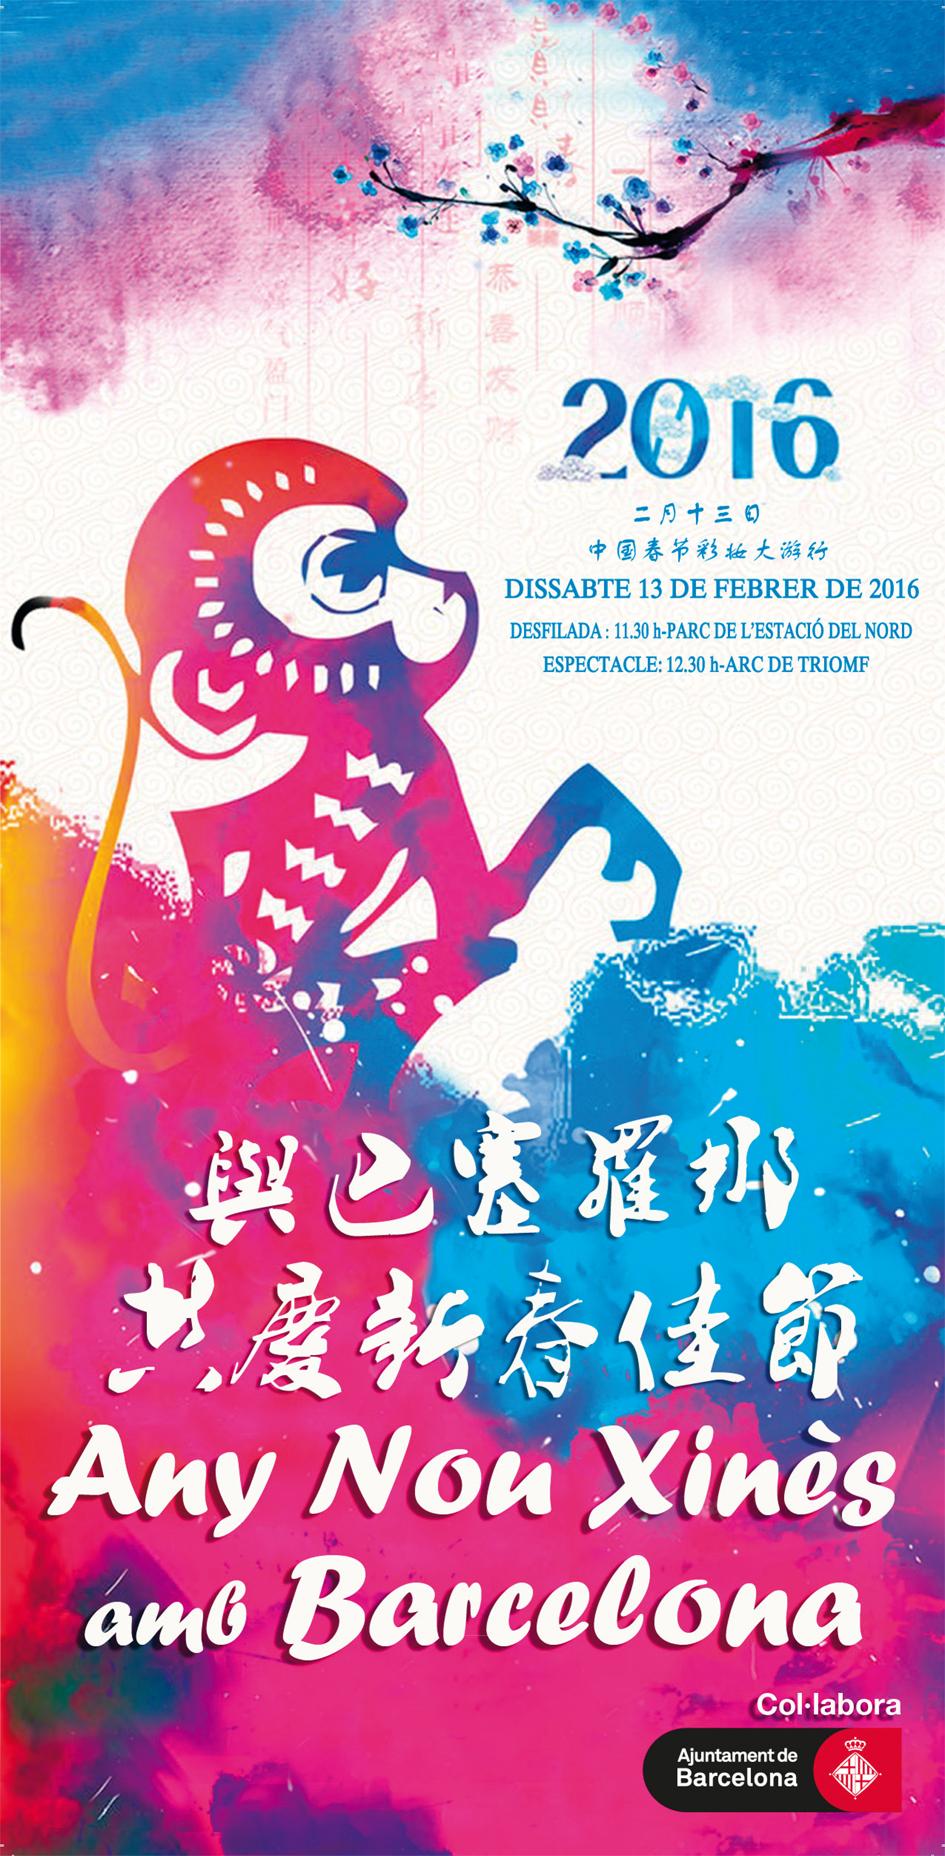 Vine a celebrar l'any nou xinès al Fort Pienc, l'any del mico!